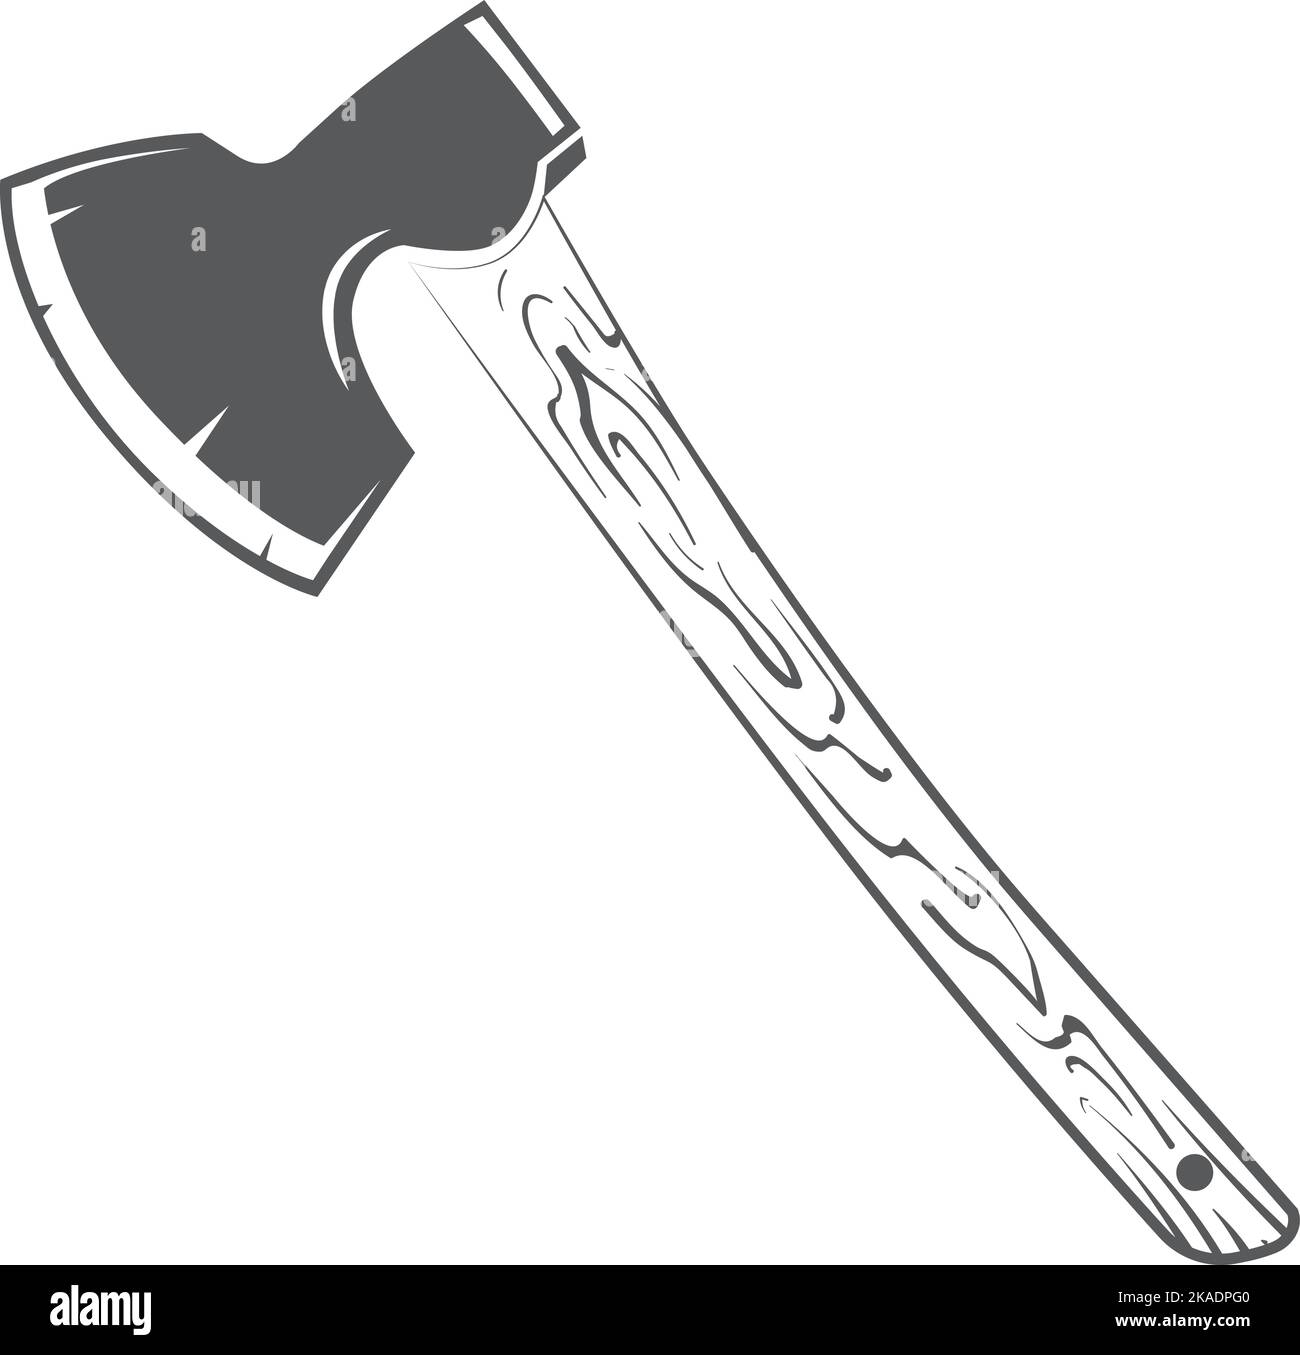 Axe black icon. Woodwork symbol. Lumberjack tool Stock Vector